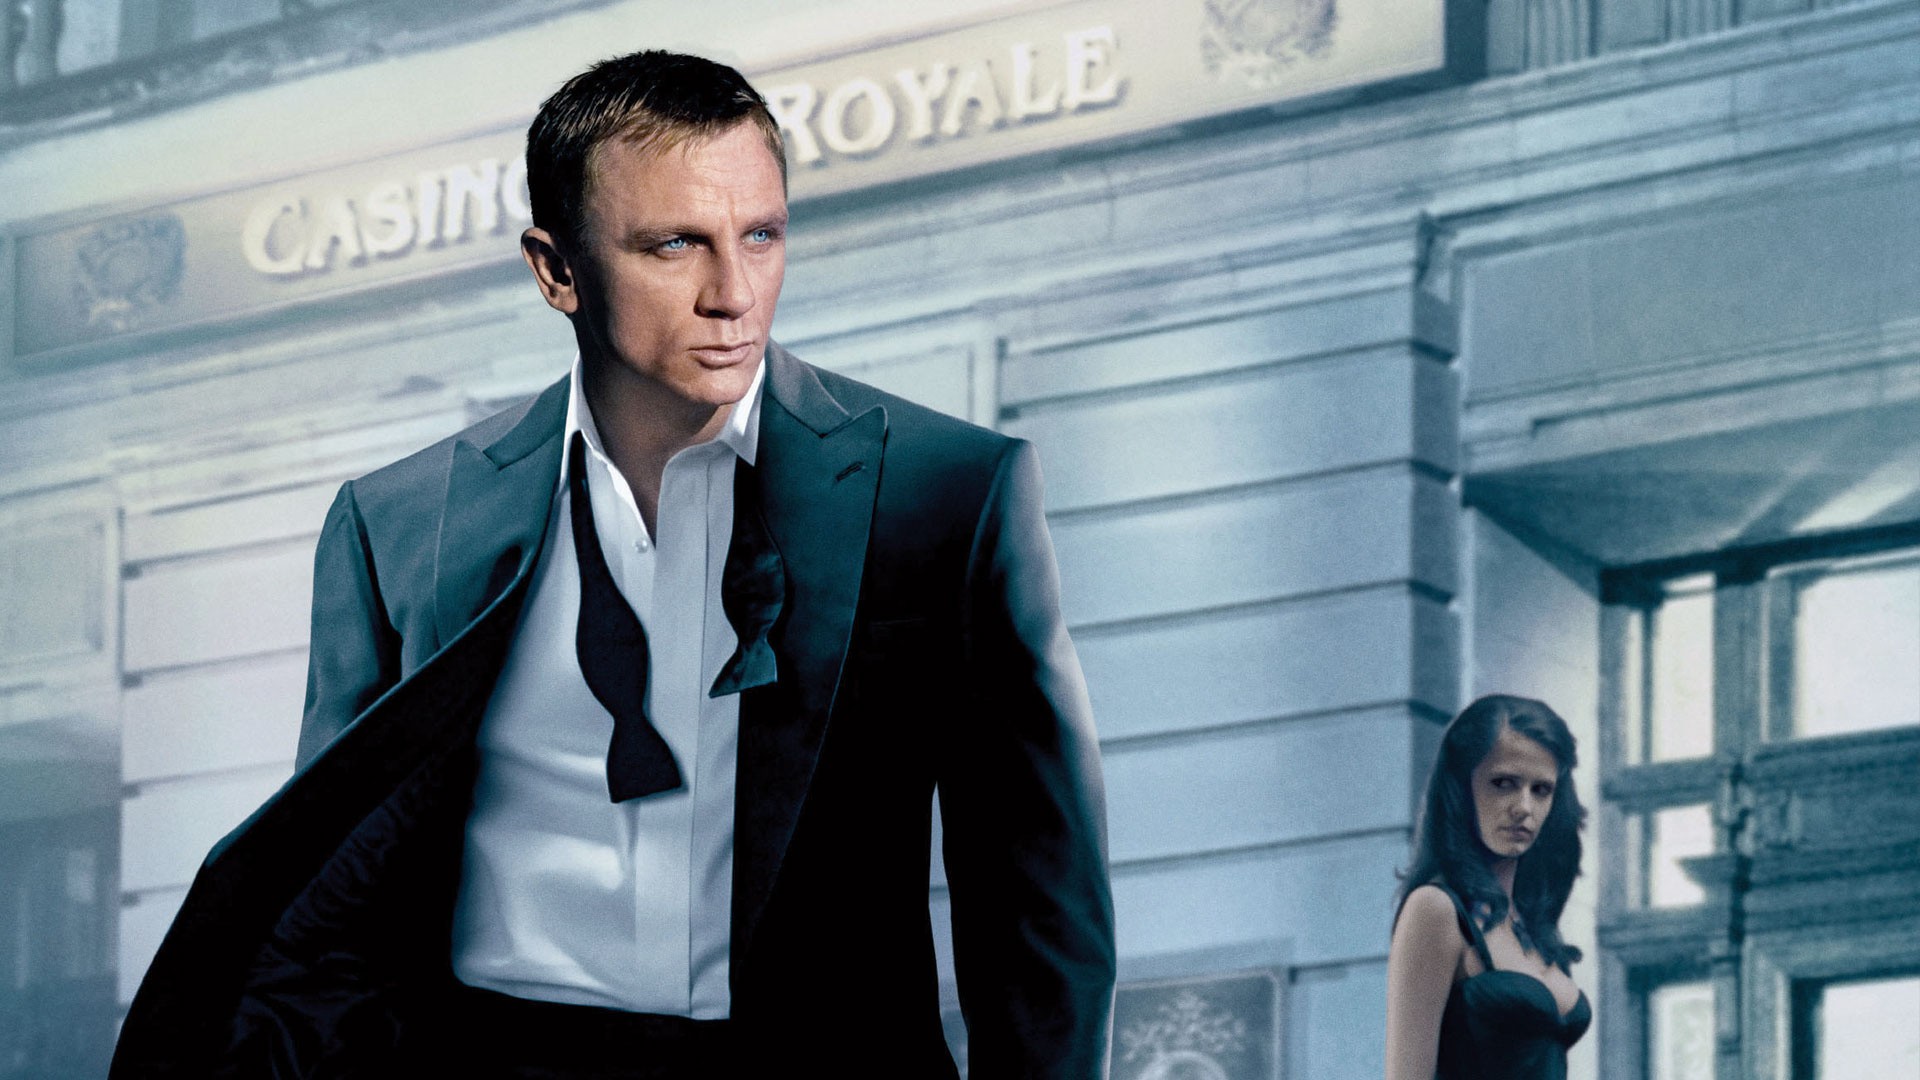 daniel craig as bond casino royale poster